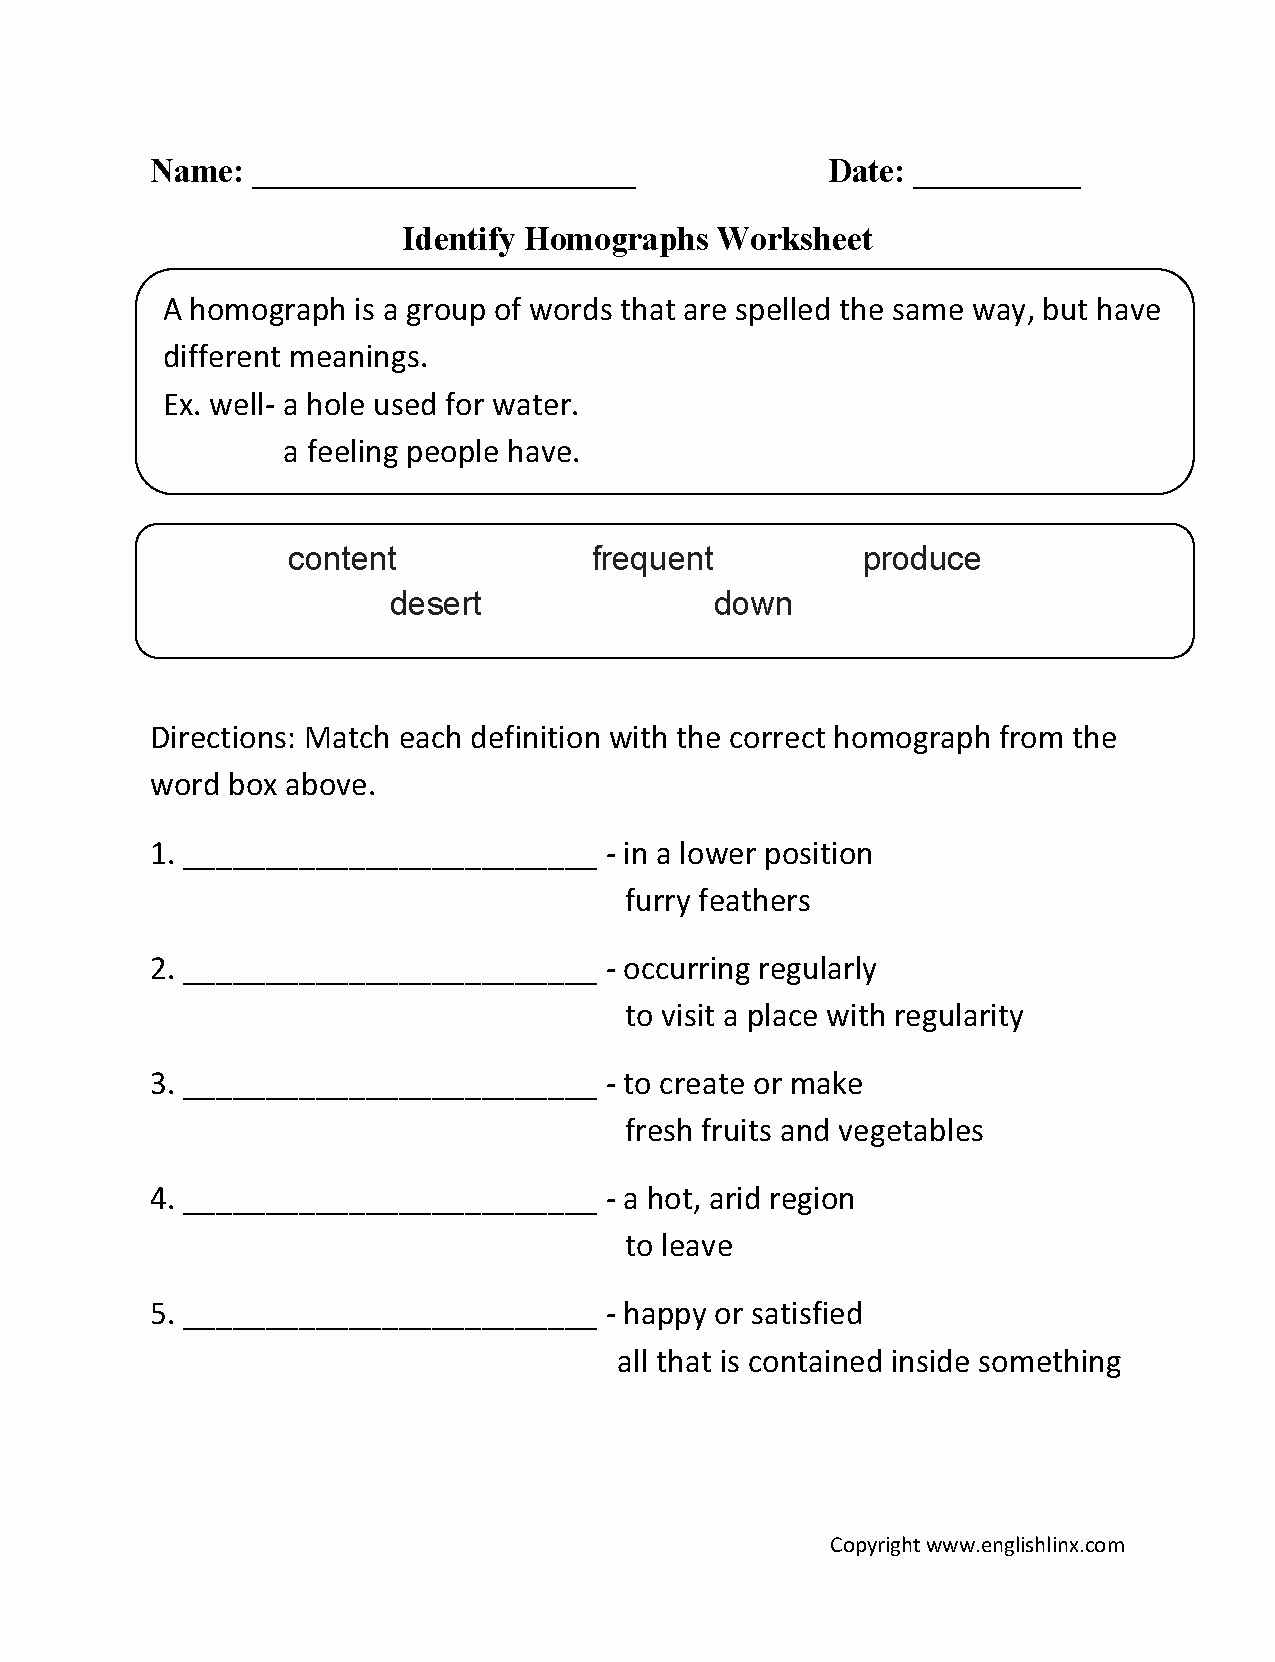 Homographs Practice Worksheets Beautiful Identify Homographs Worksheet